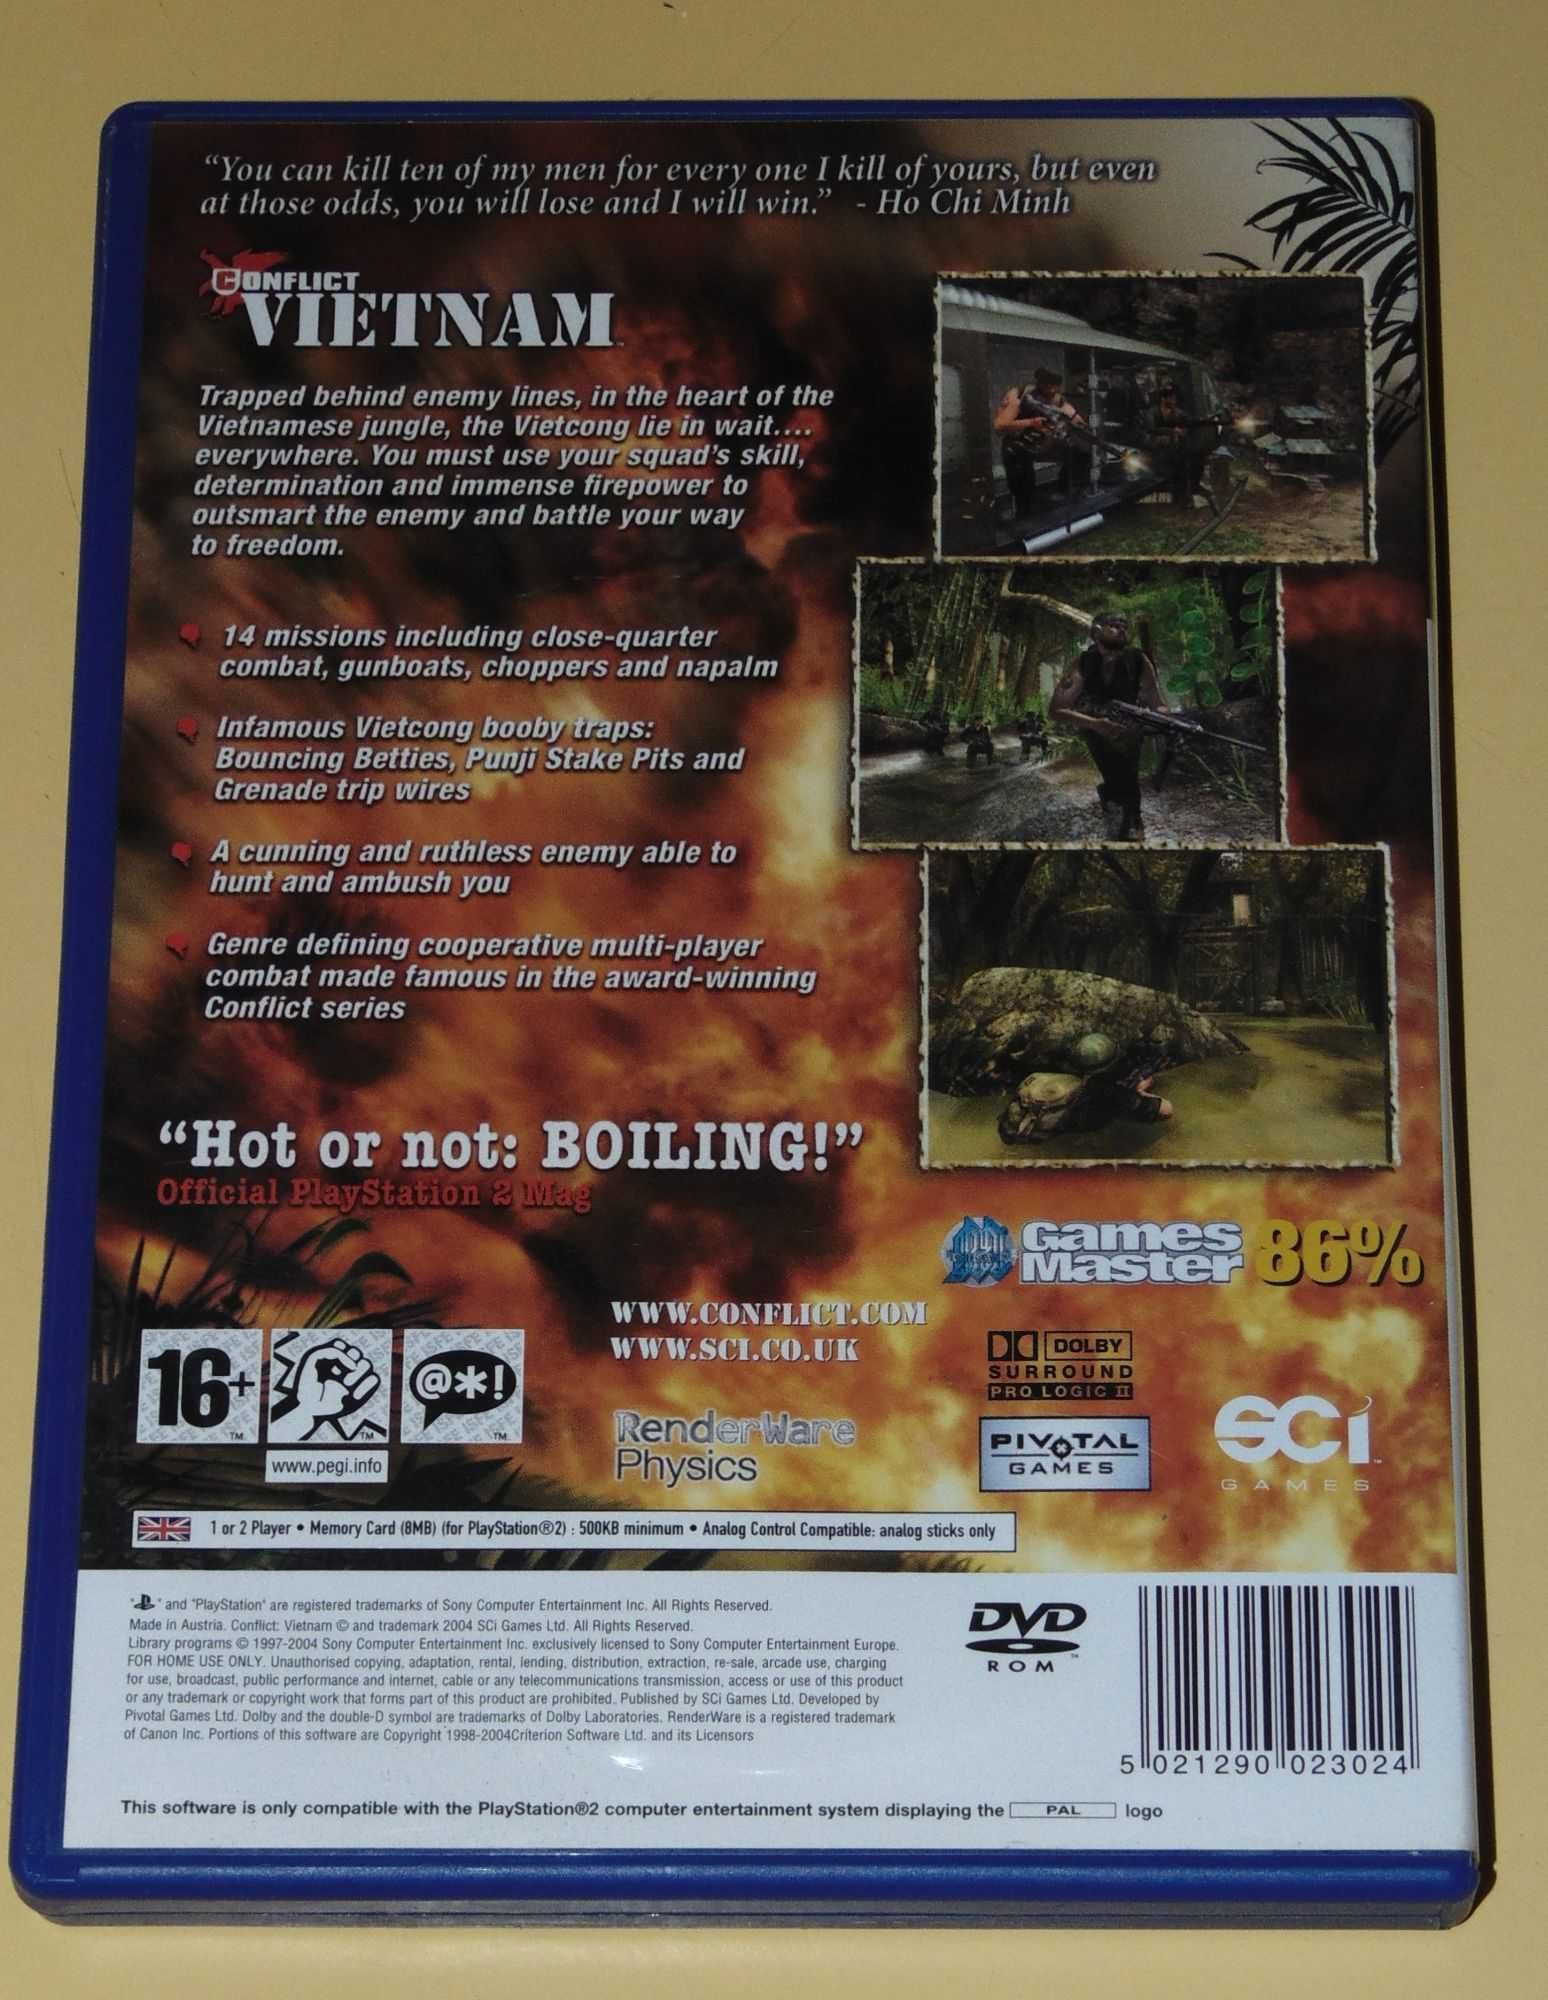 Conflict Vietnam gra na PlayStation 2 - stan BDB